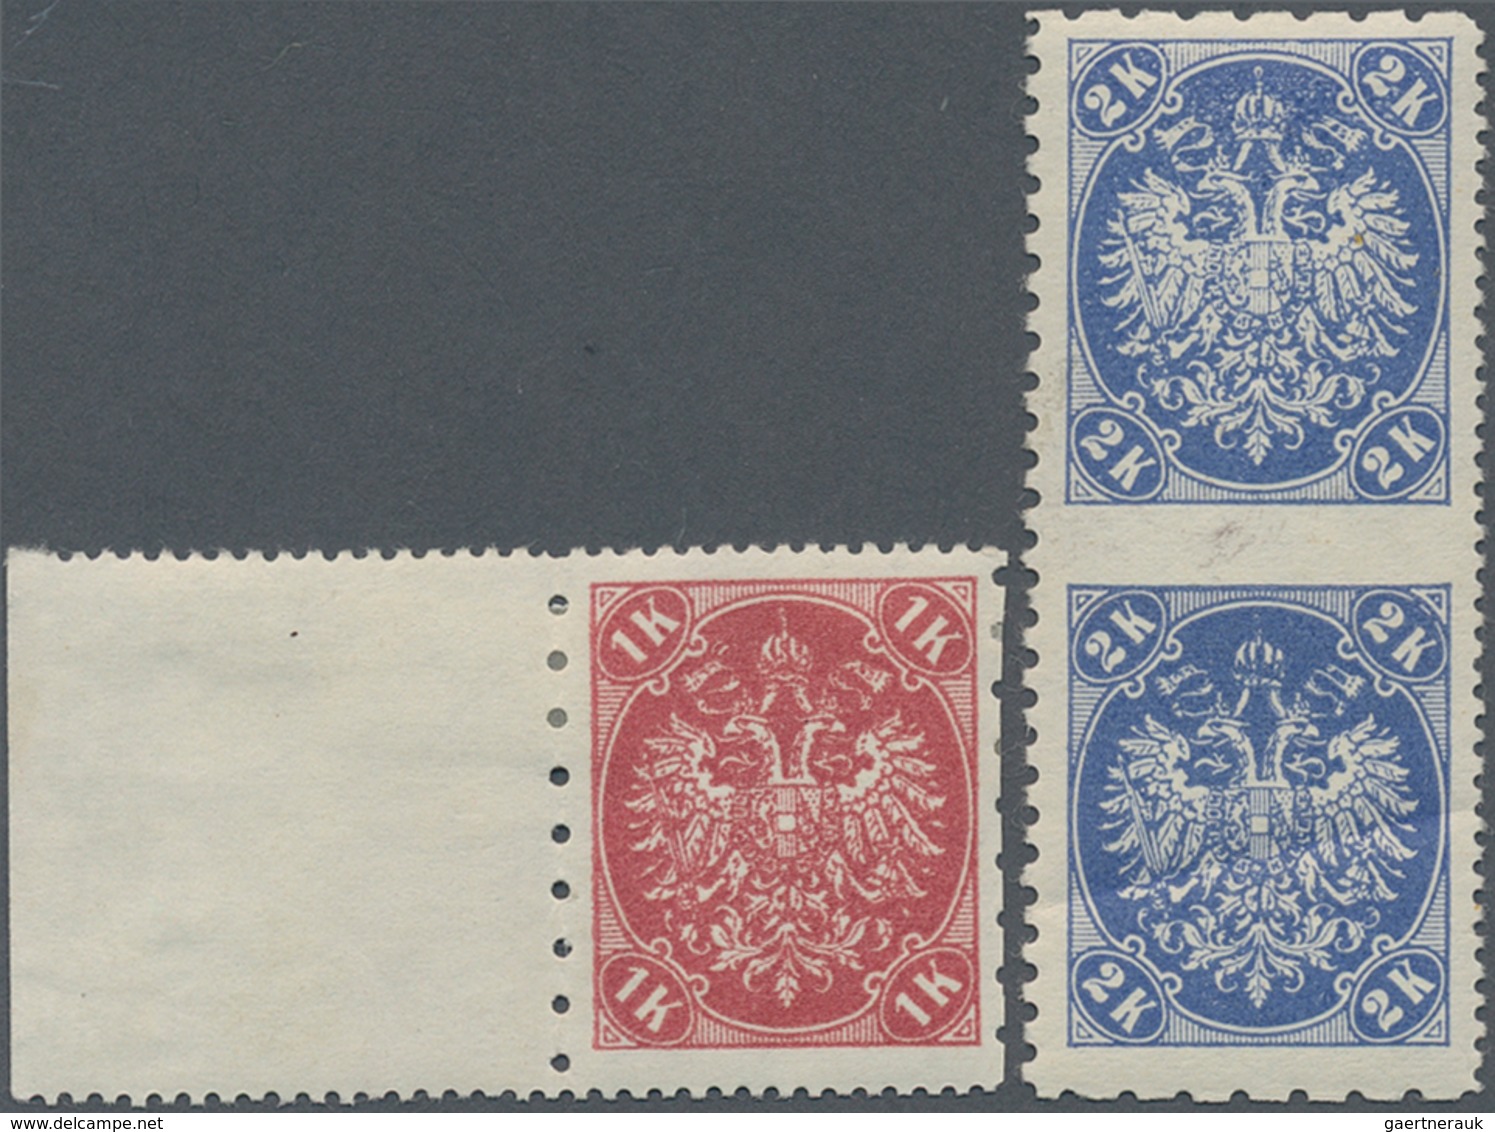 Bosnien Und Herzegowina: 1900, Definitives "Double Eagle", 1kr. Rose And 2 Kr. Ultramarine, Speciali - Bosnien-Herzegowina